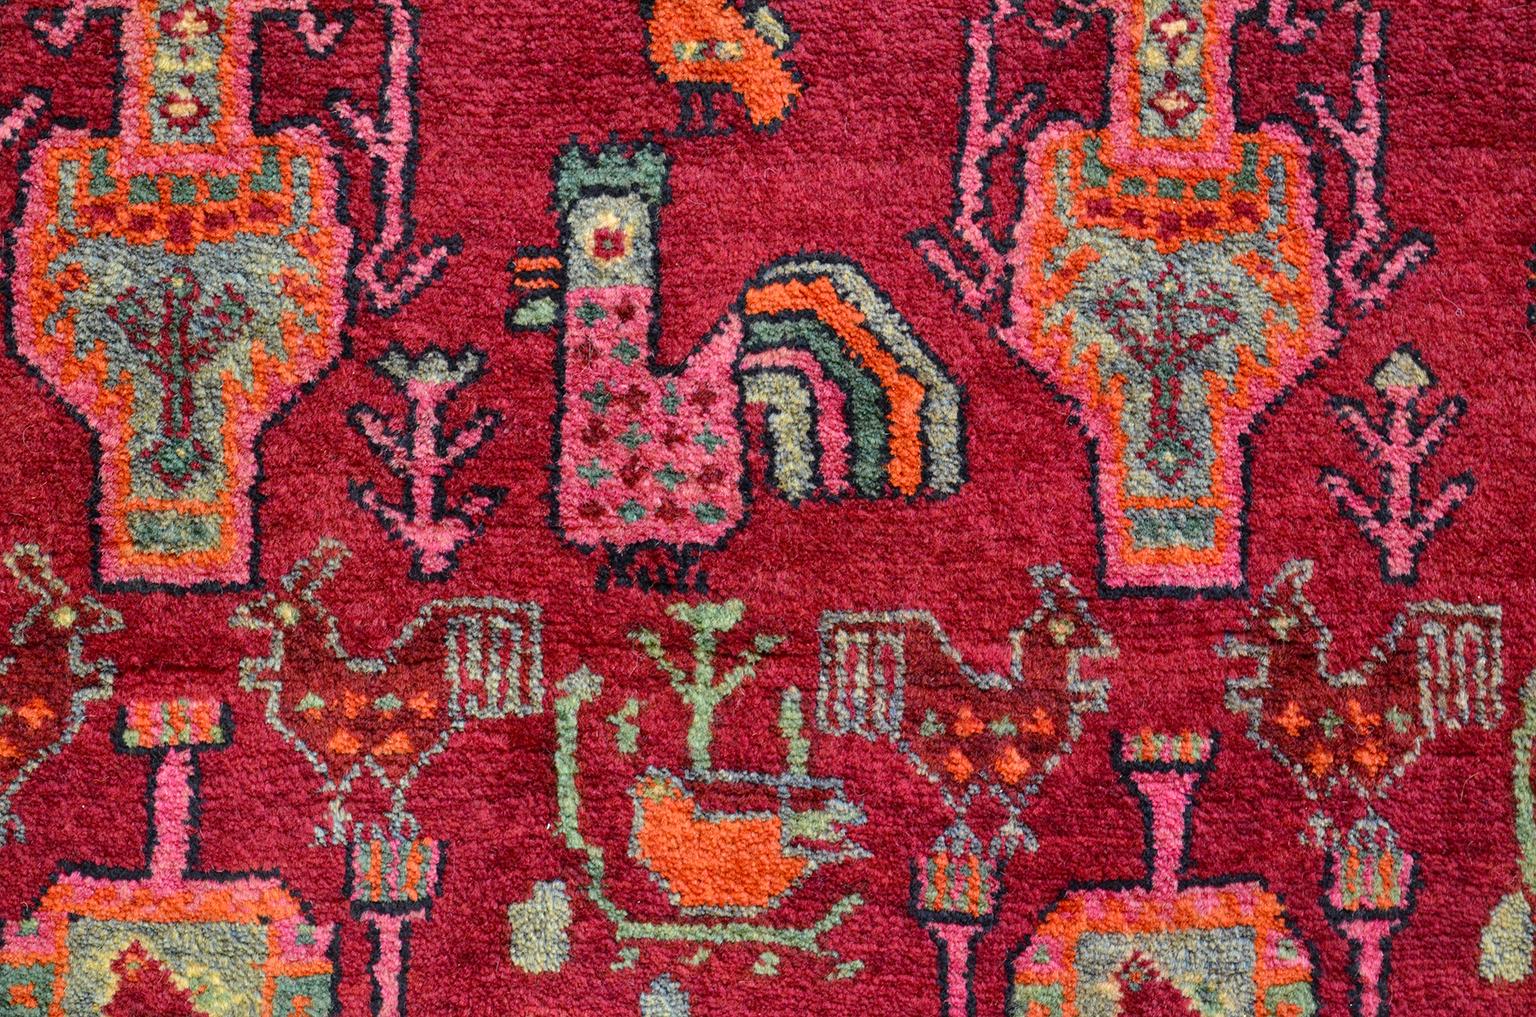 Vegetable Dyed Vintage 1940s Wool Persian Belouchi Rug, Peacock Design, 5' x 9' For Sale